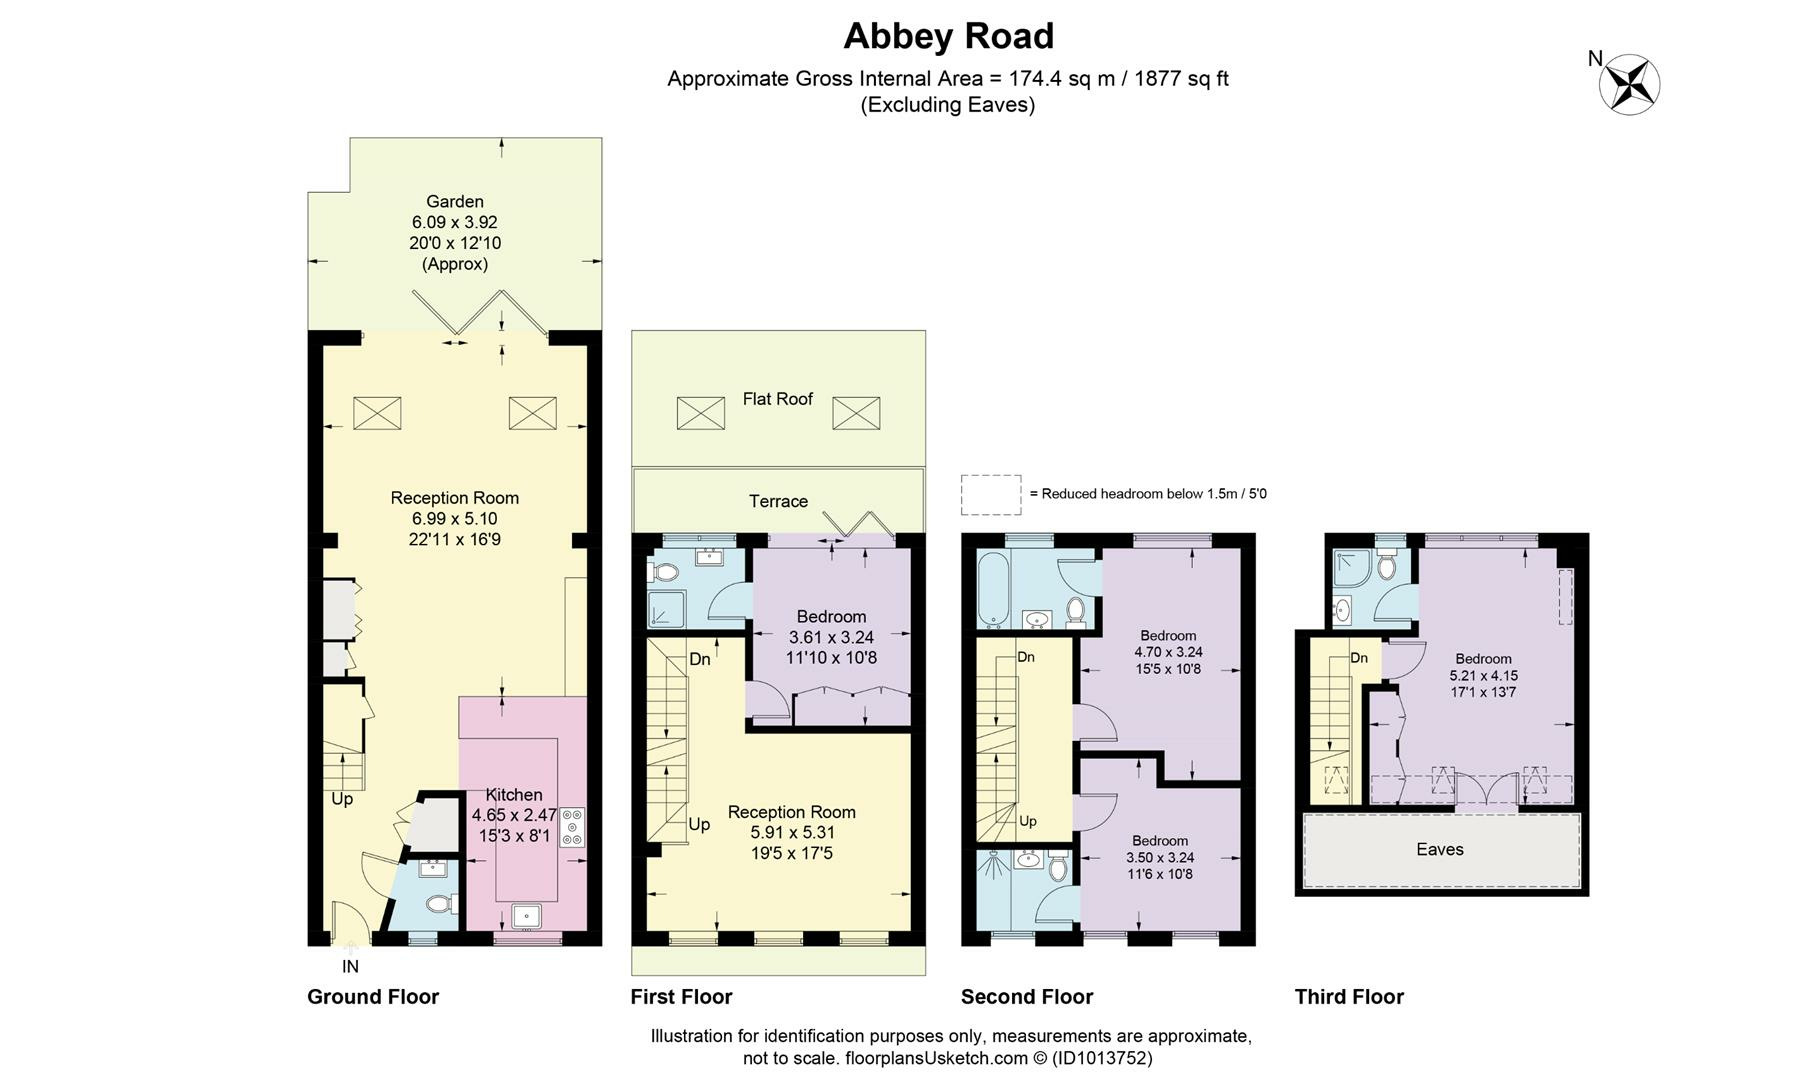 for-sale-abbey-road-london-410-floorview1